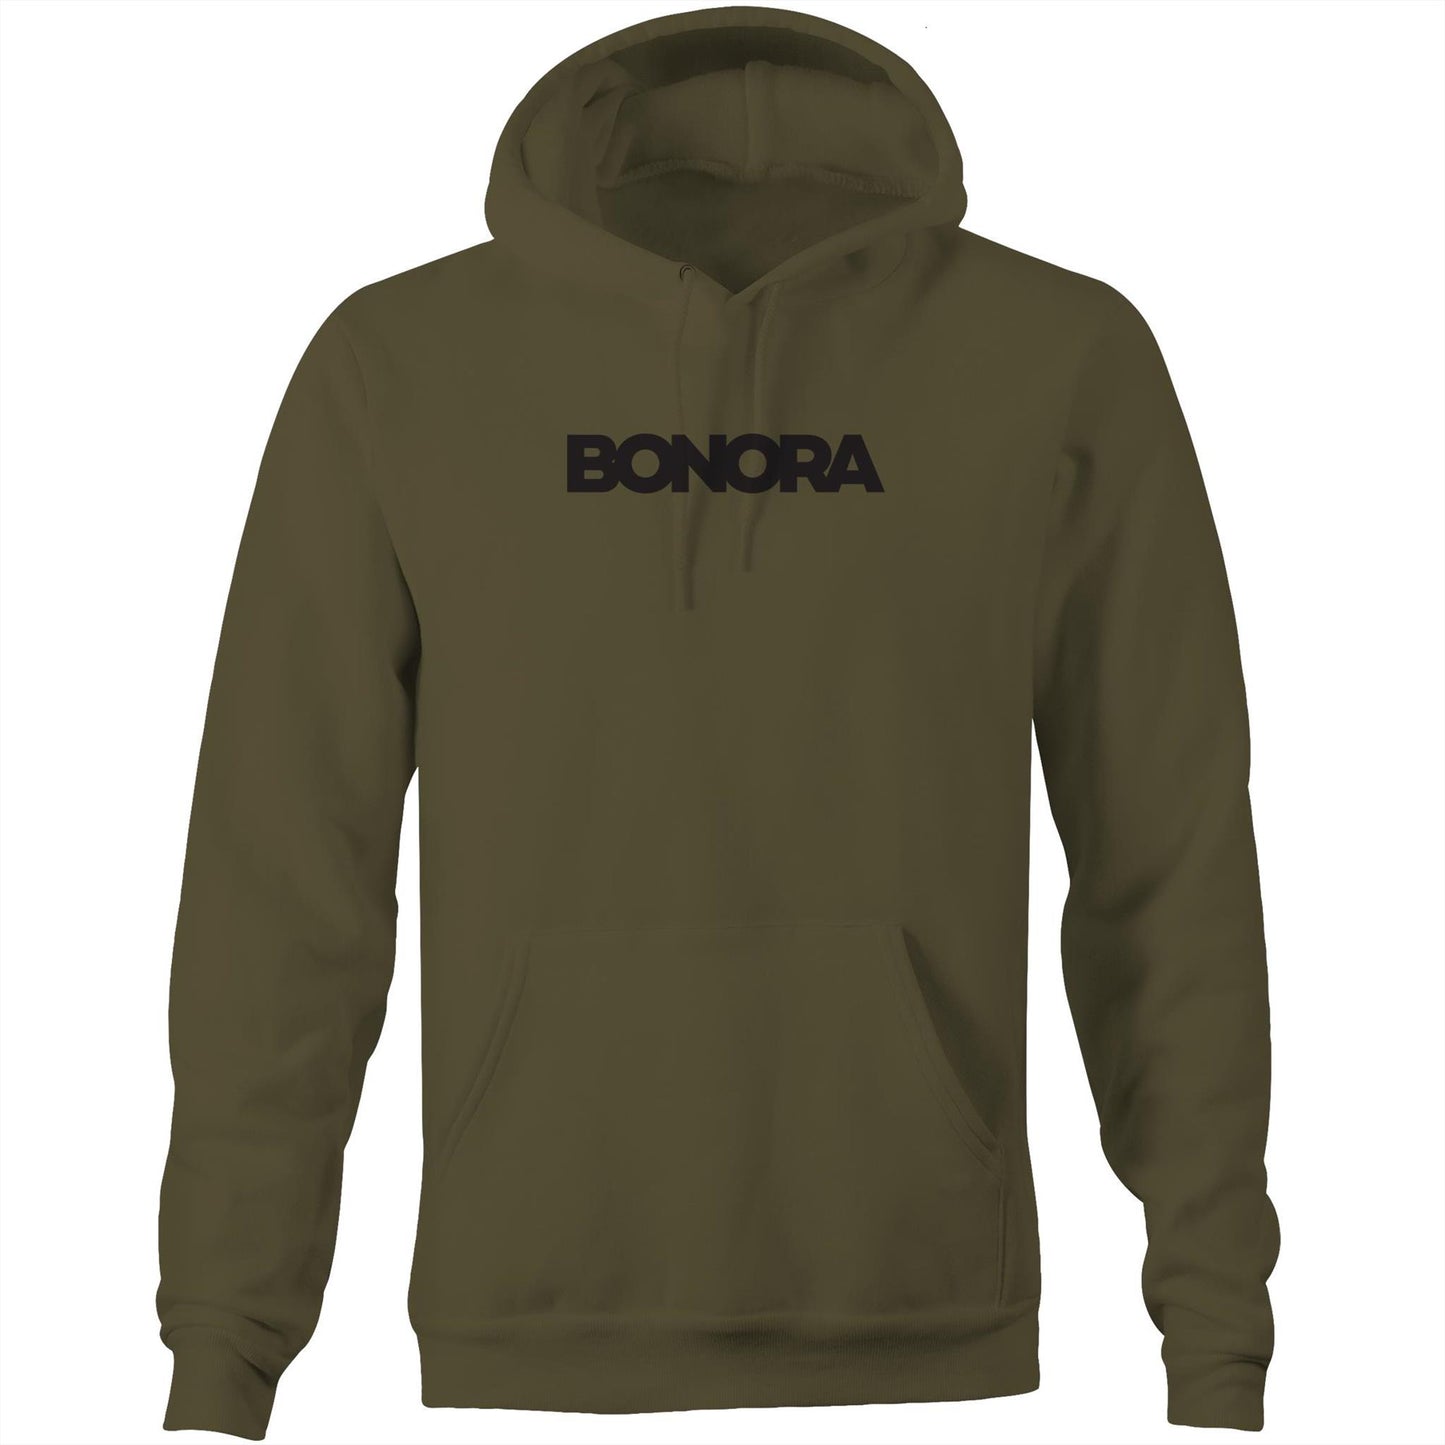 Bonora Logo Comfy Hoodie